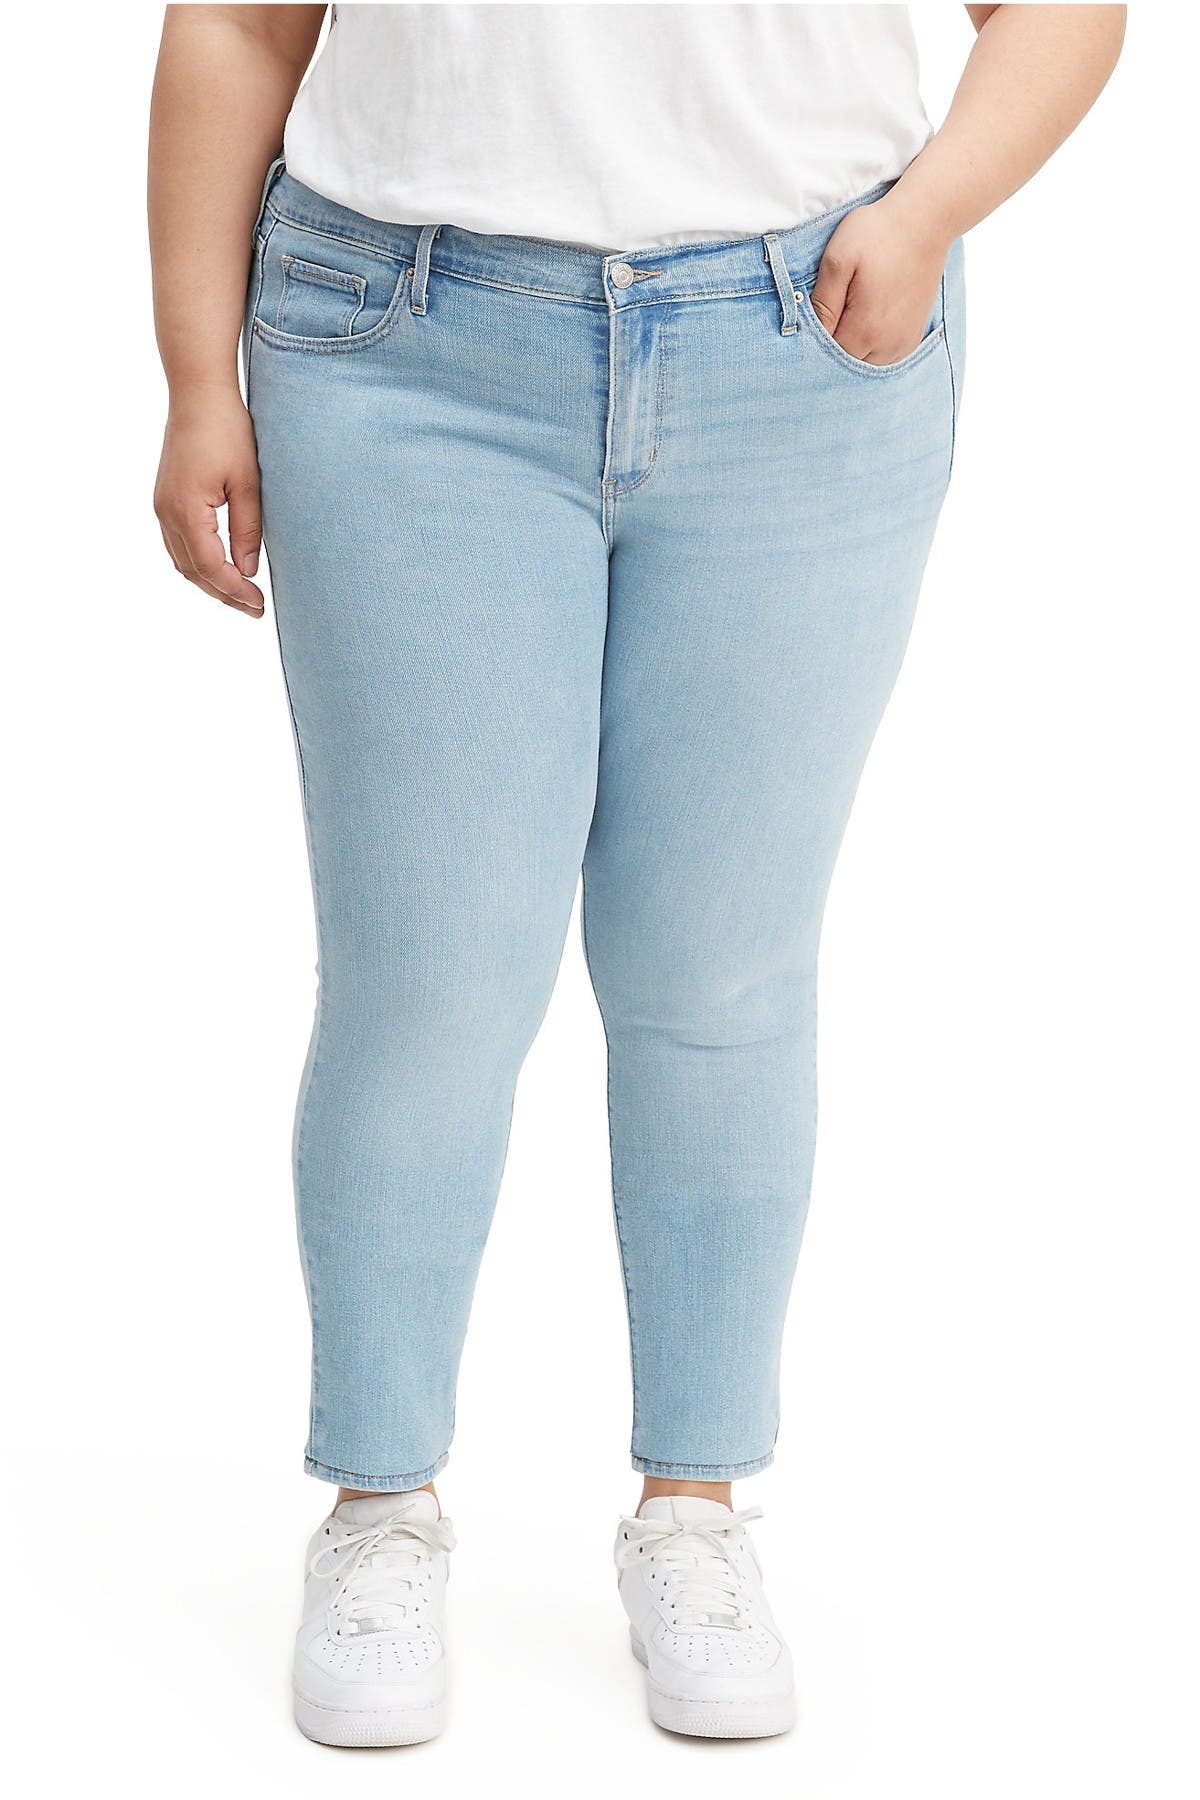 levi's 711 skinny jeans size chart